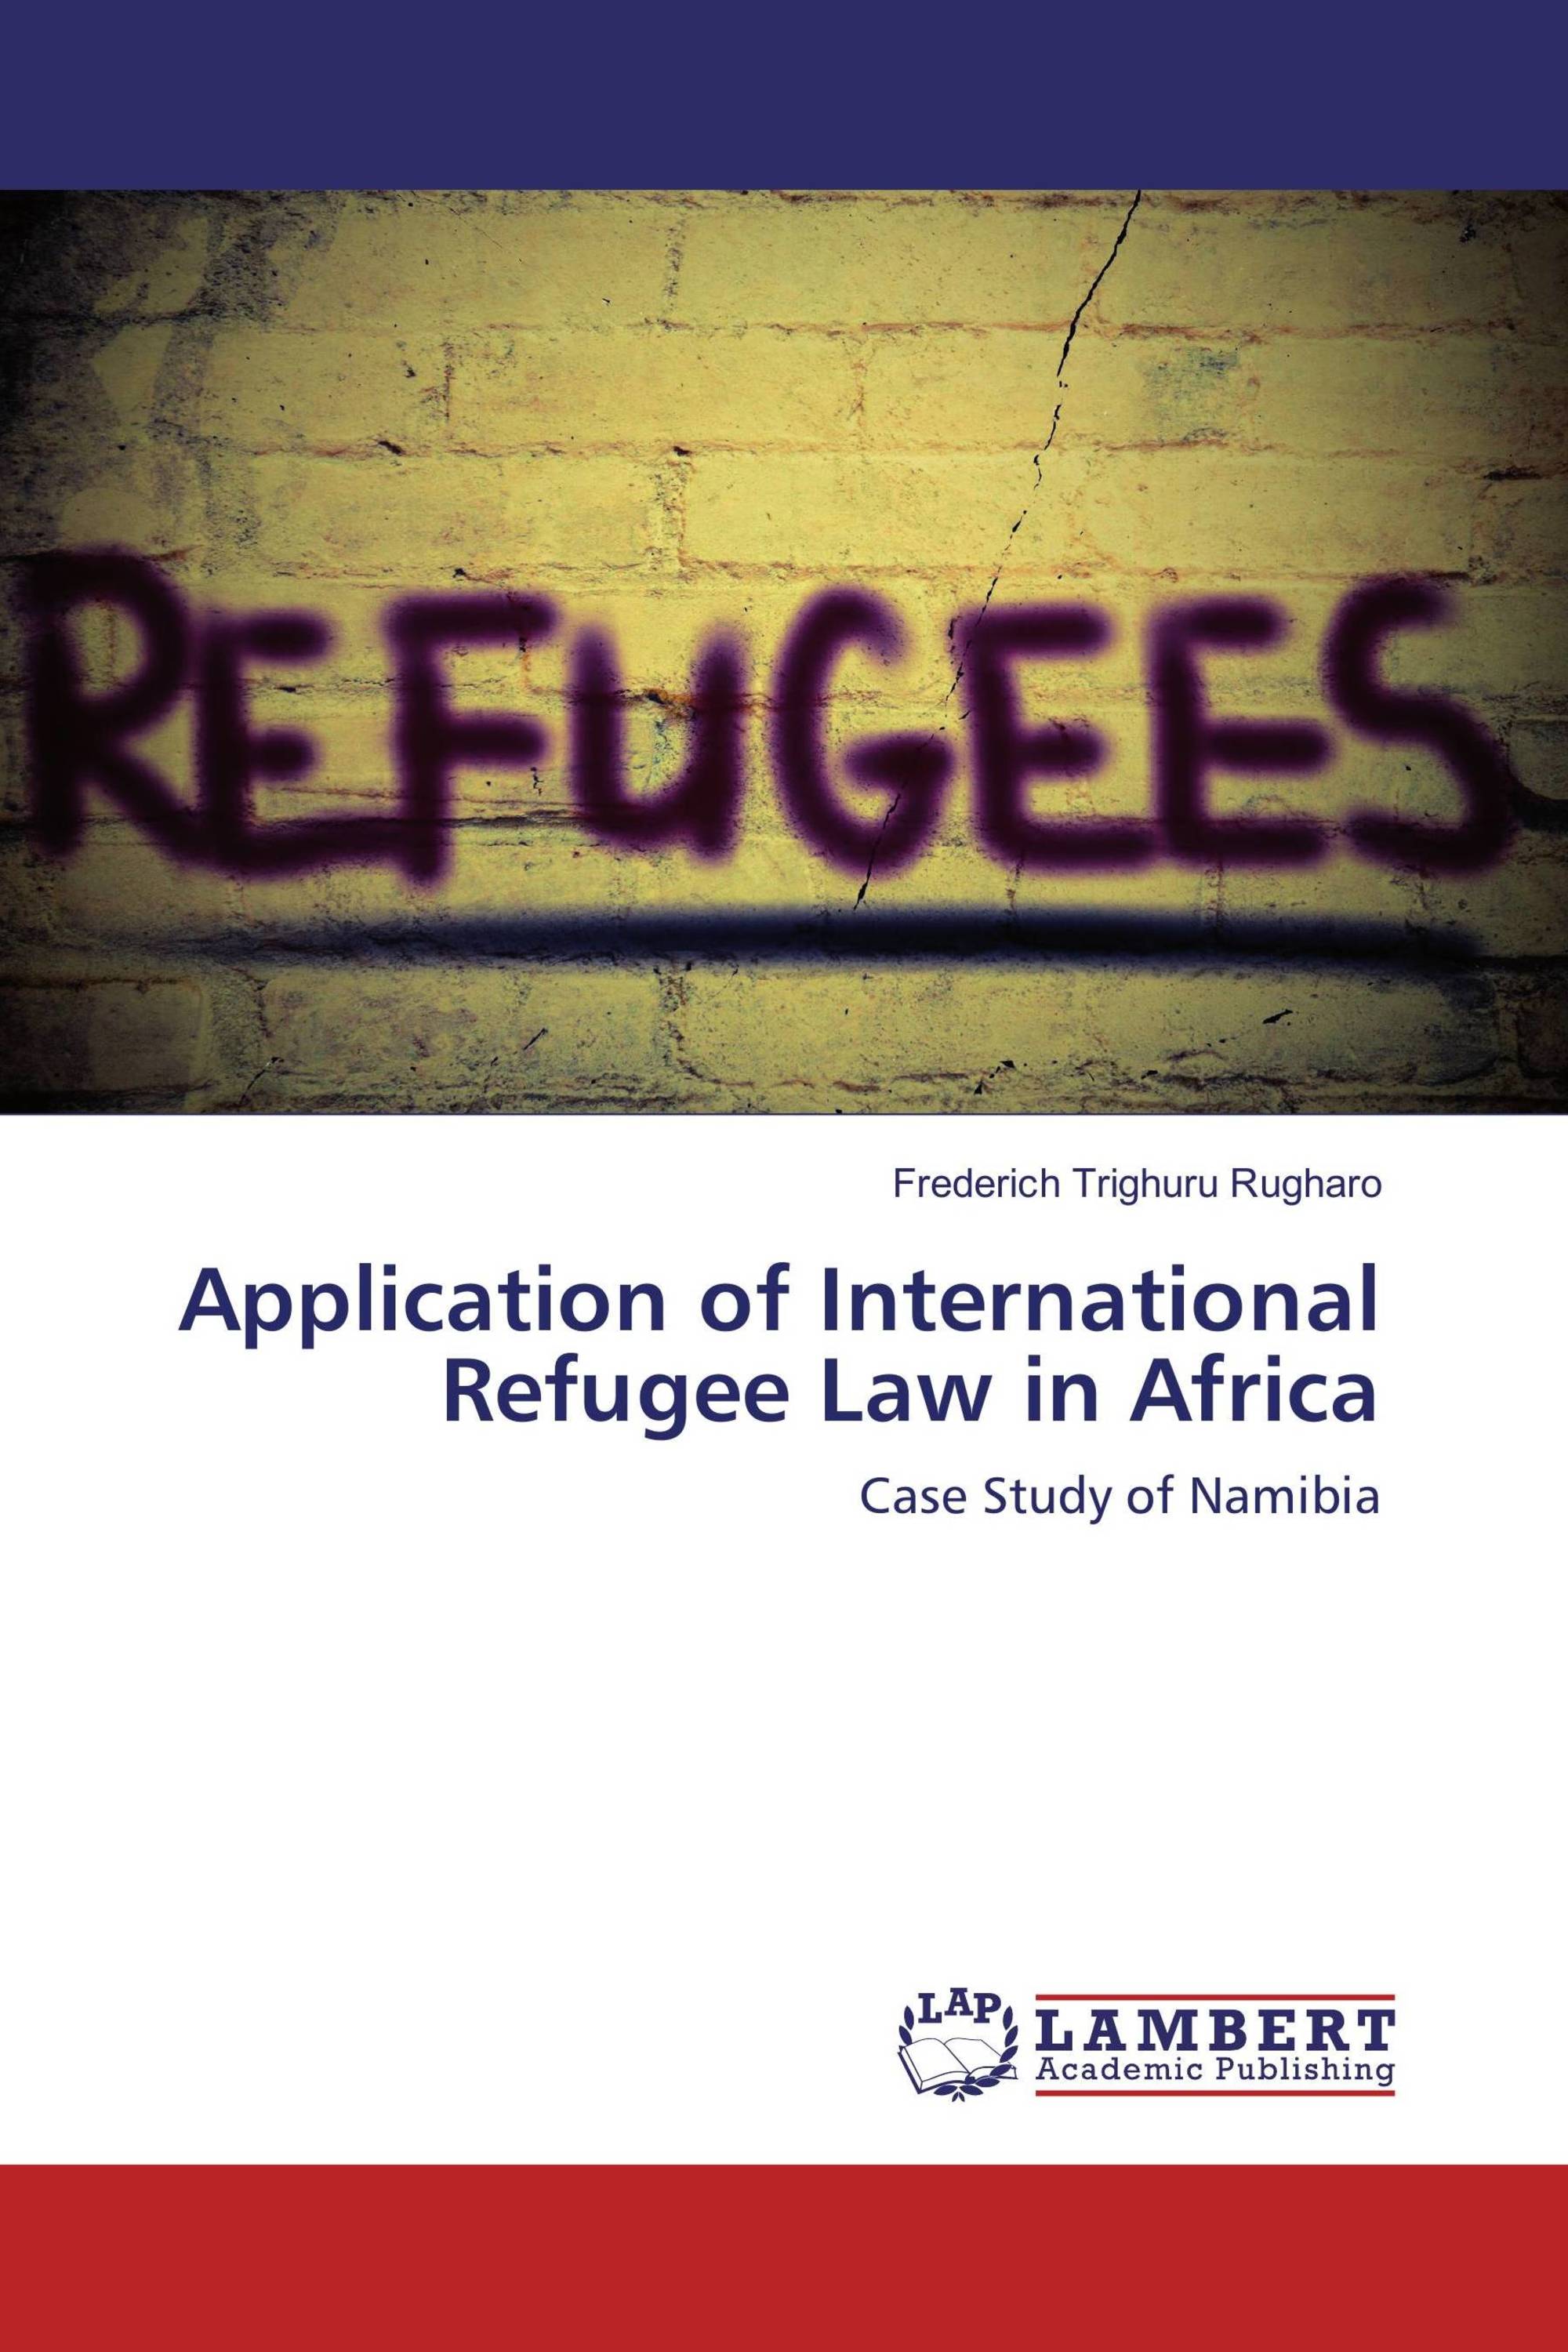 International refugee law jobs